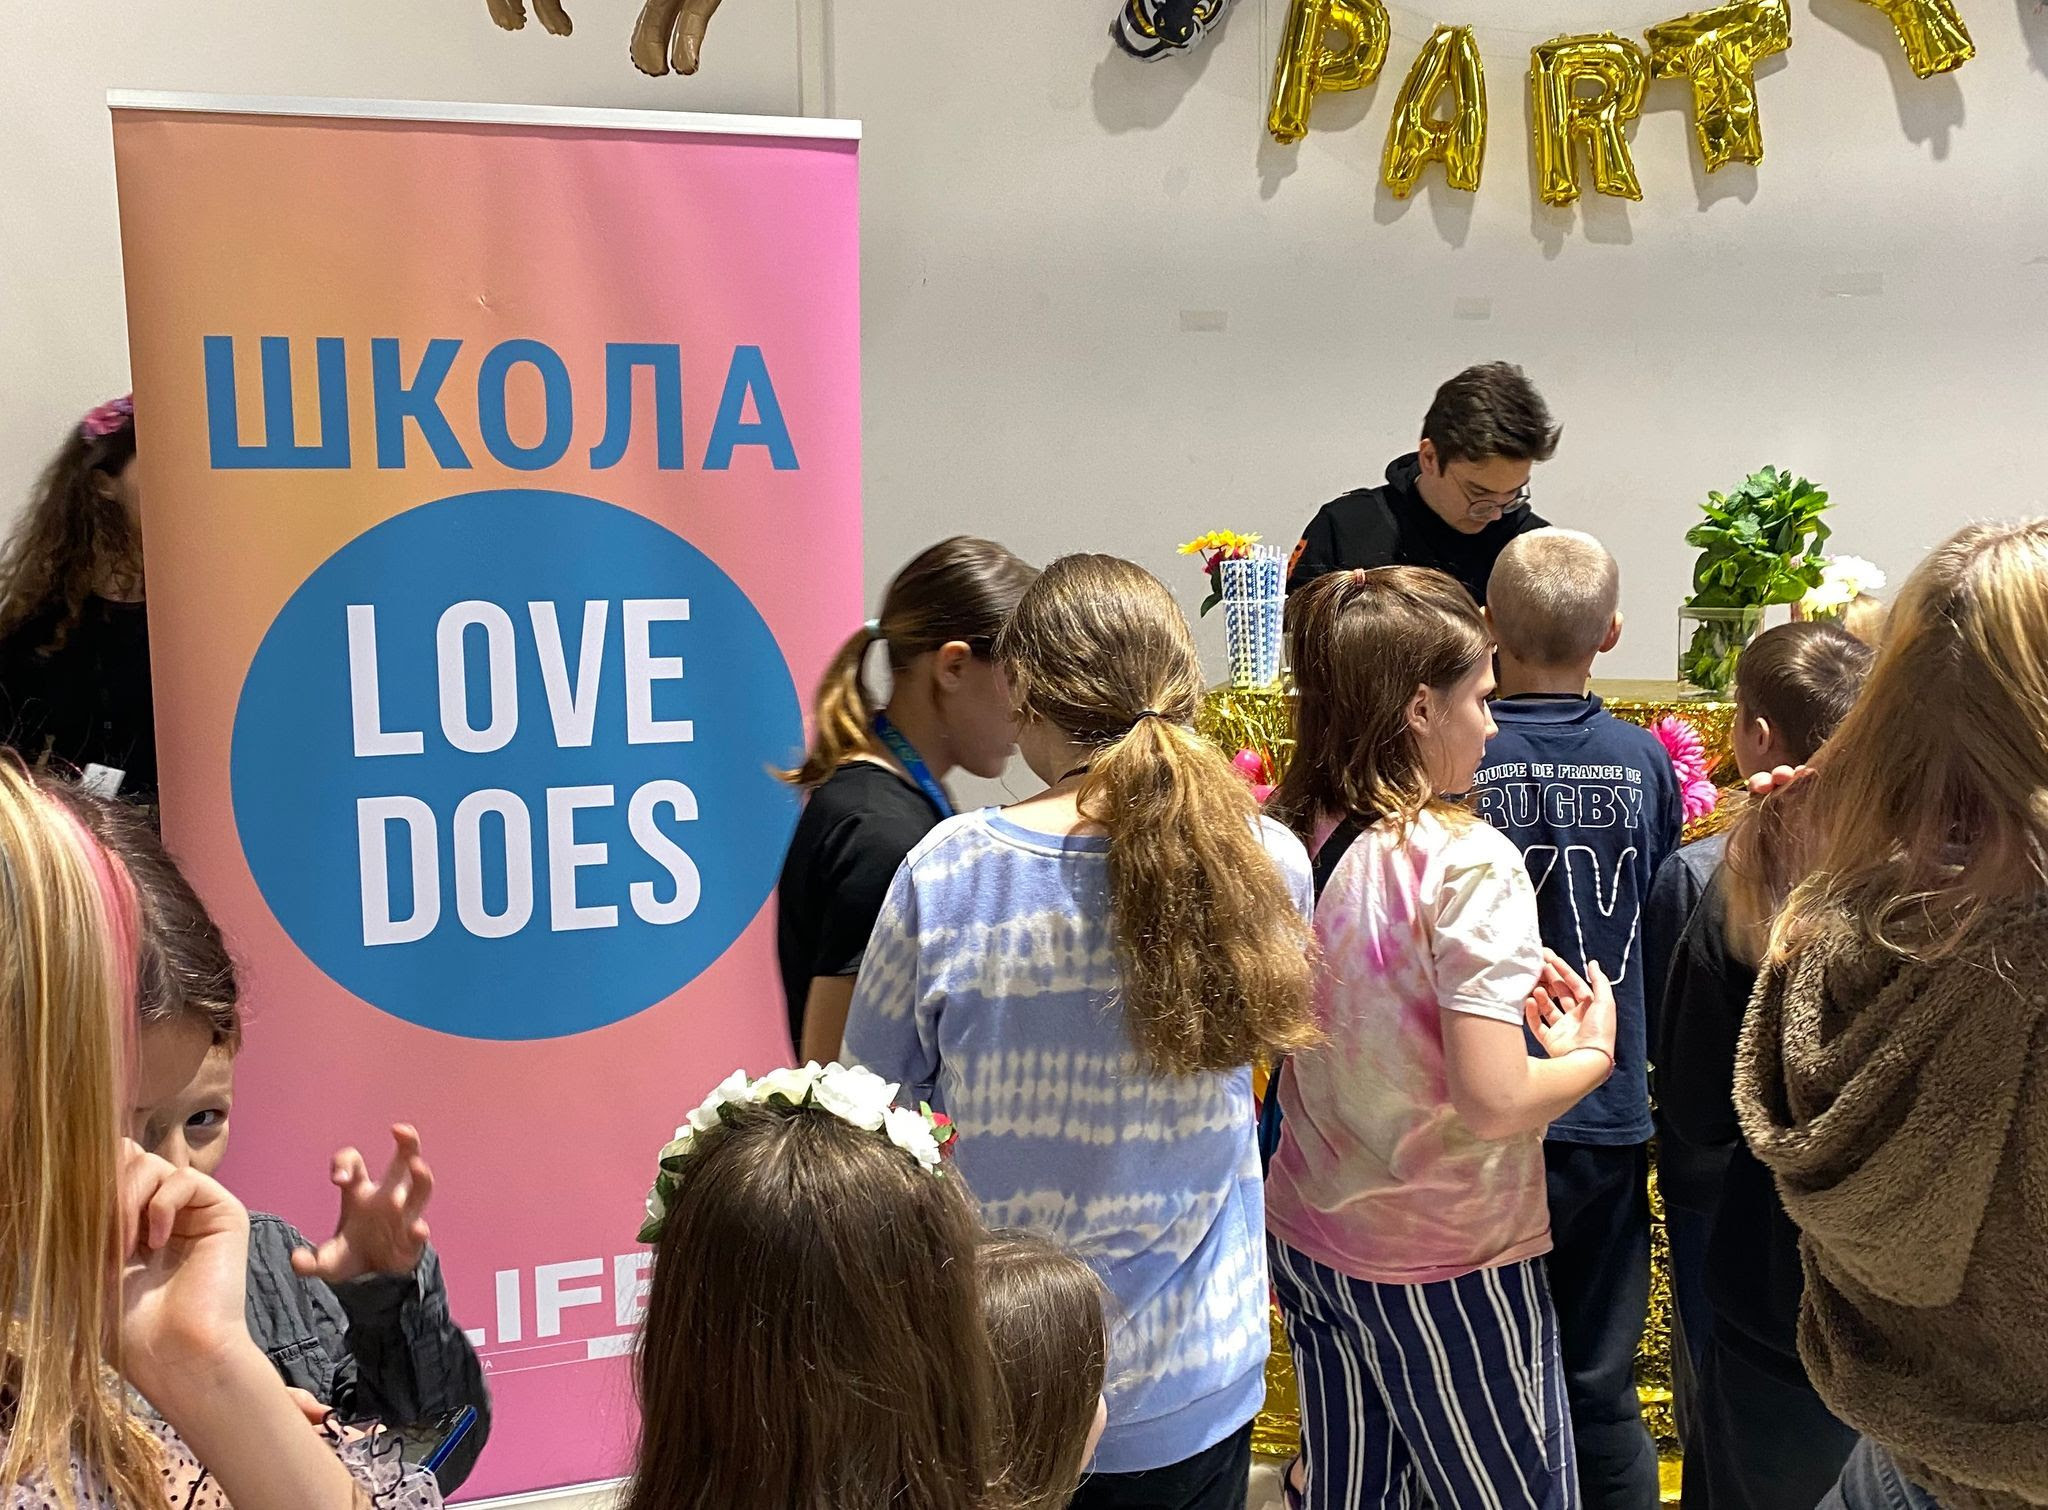 An Update on the Love Does Ukrainian Refugee School